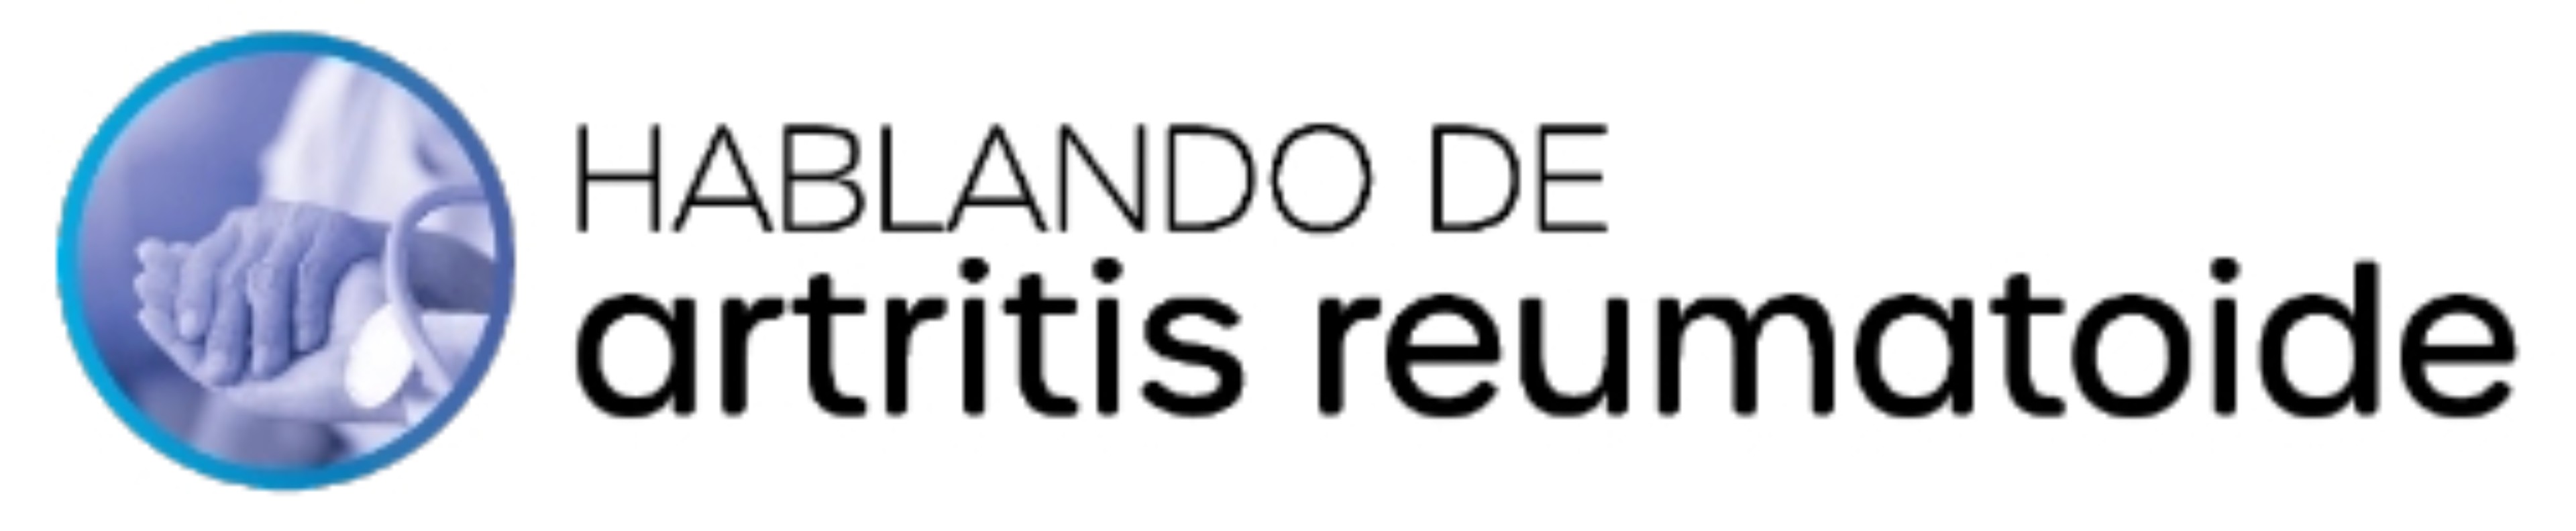 blog-artritis-logo